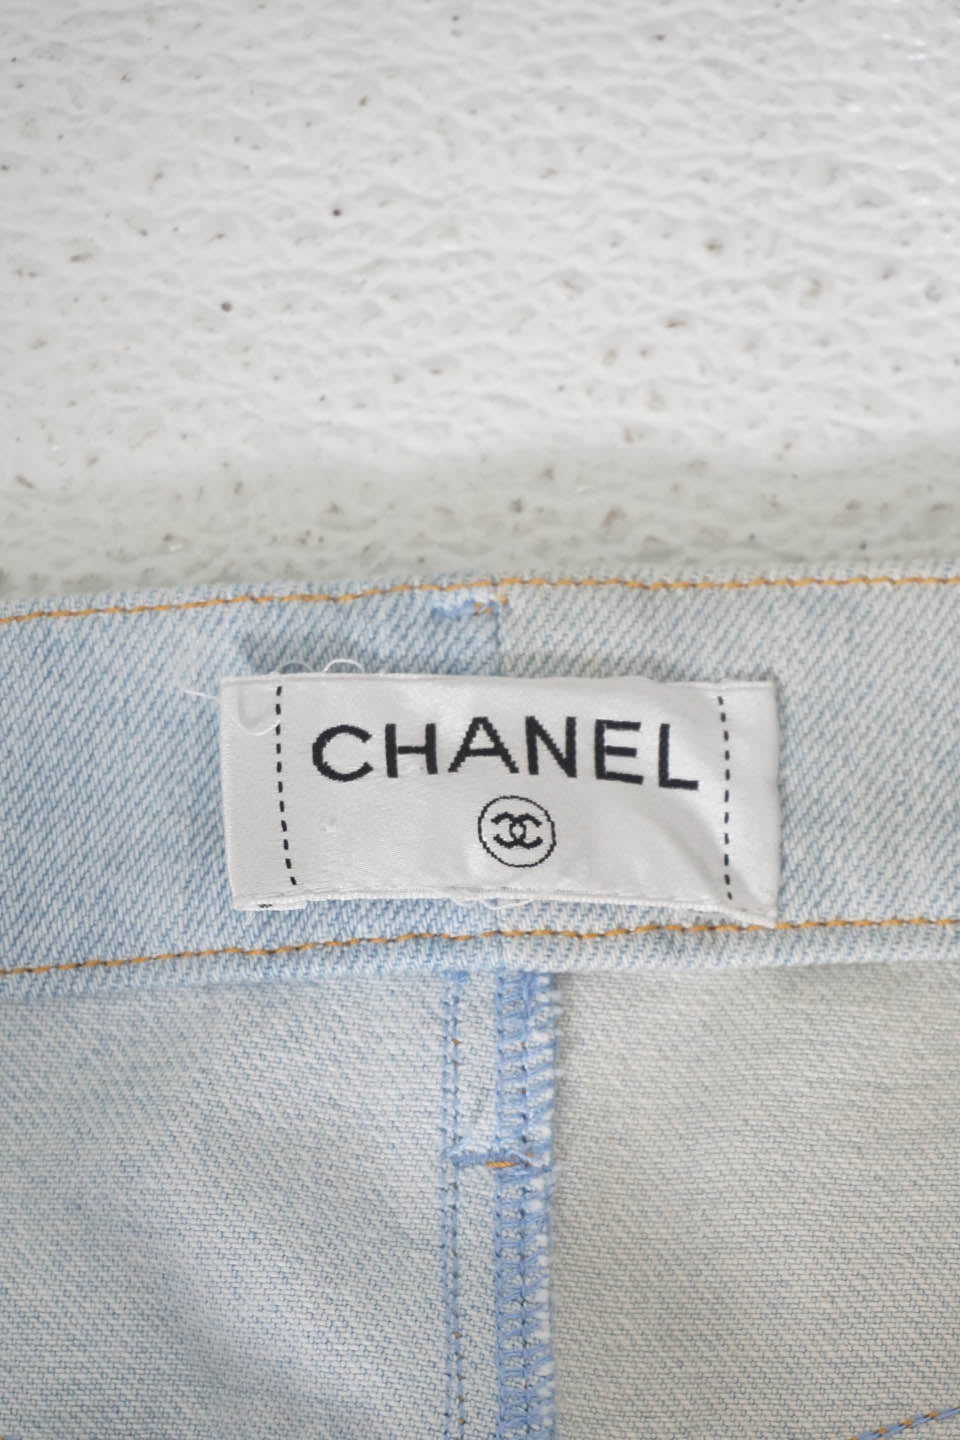 Chanel Button Front Leg, Two Tone, Wide Leg Jeans 2017 Size 36